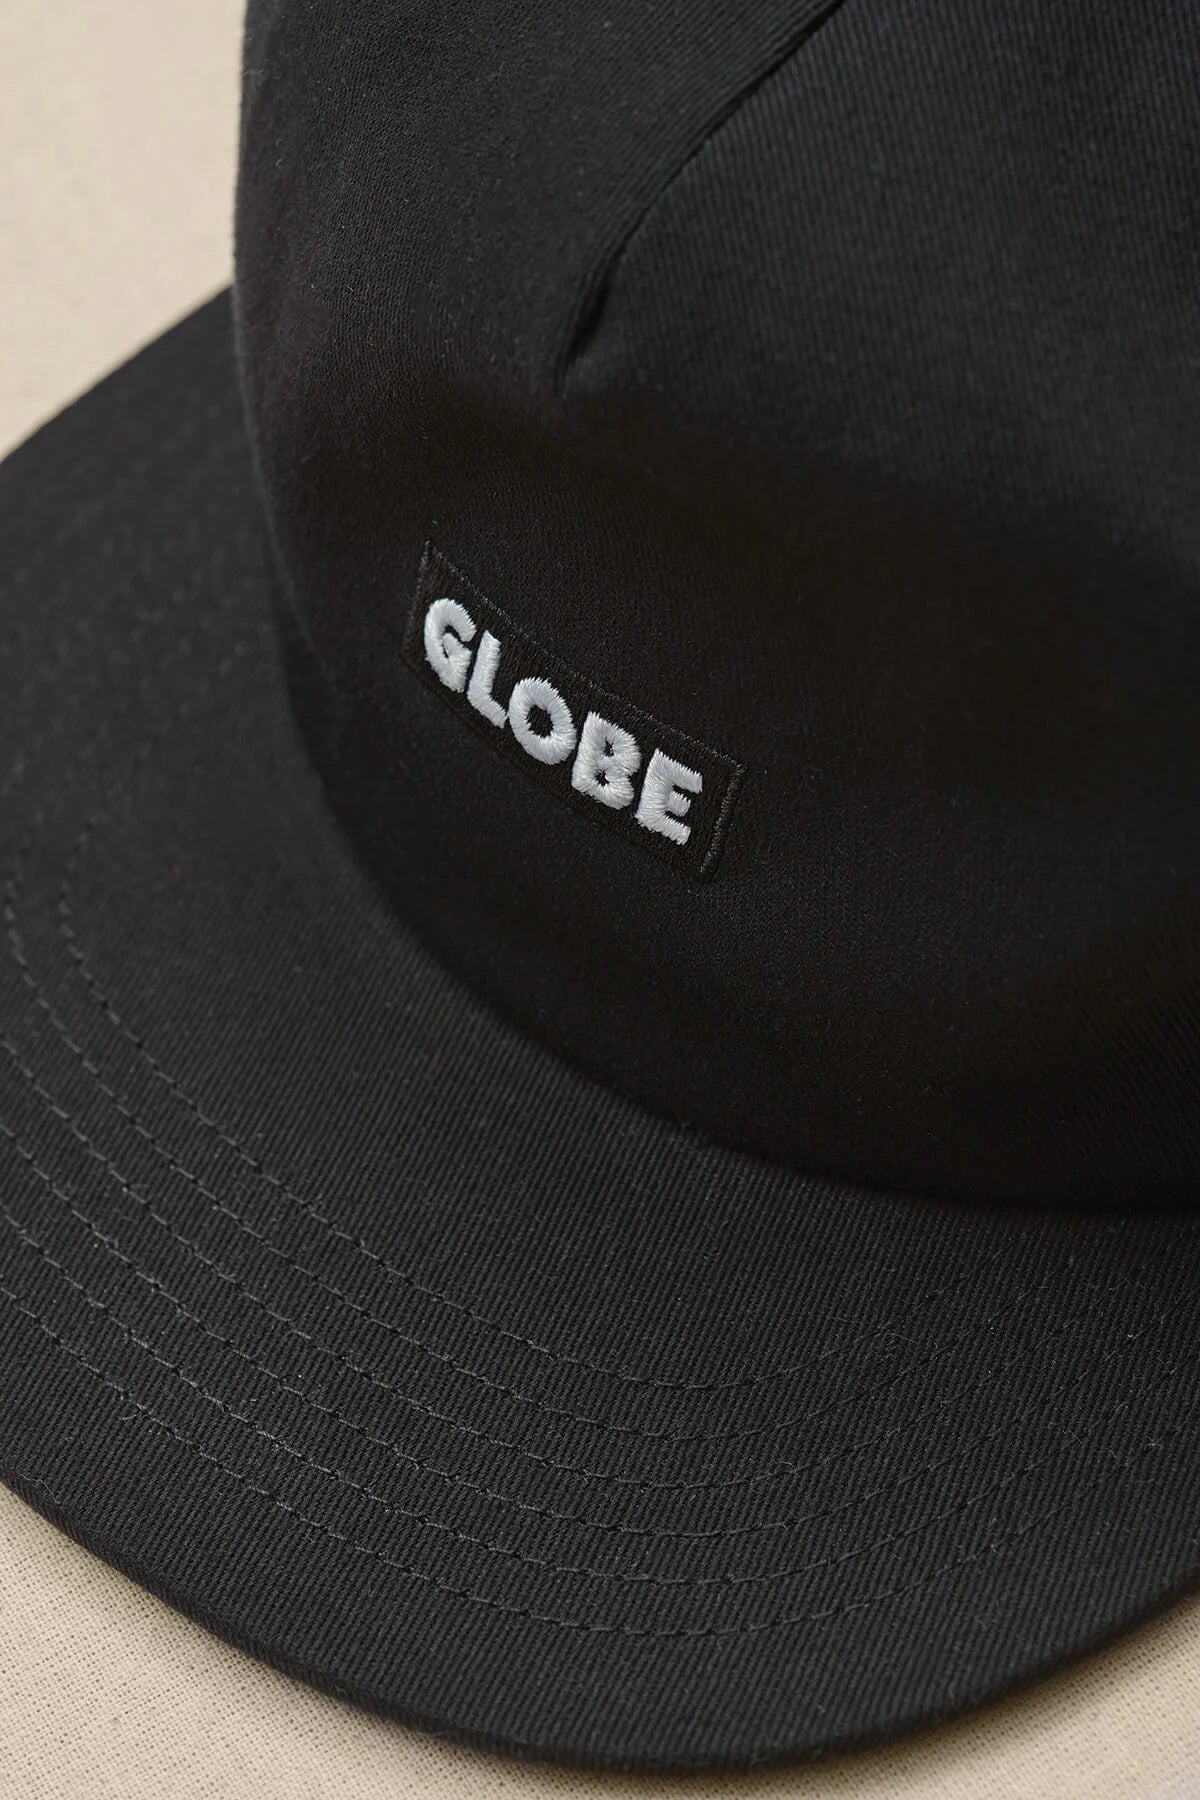 GLOBE GORRA LV CAP - Black